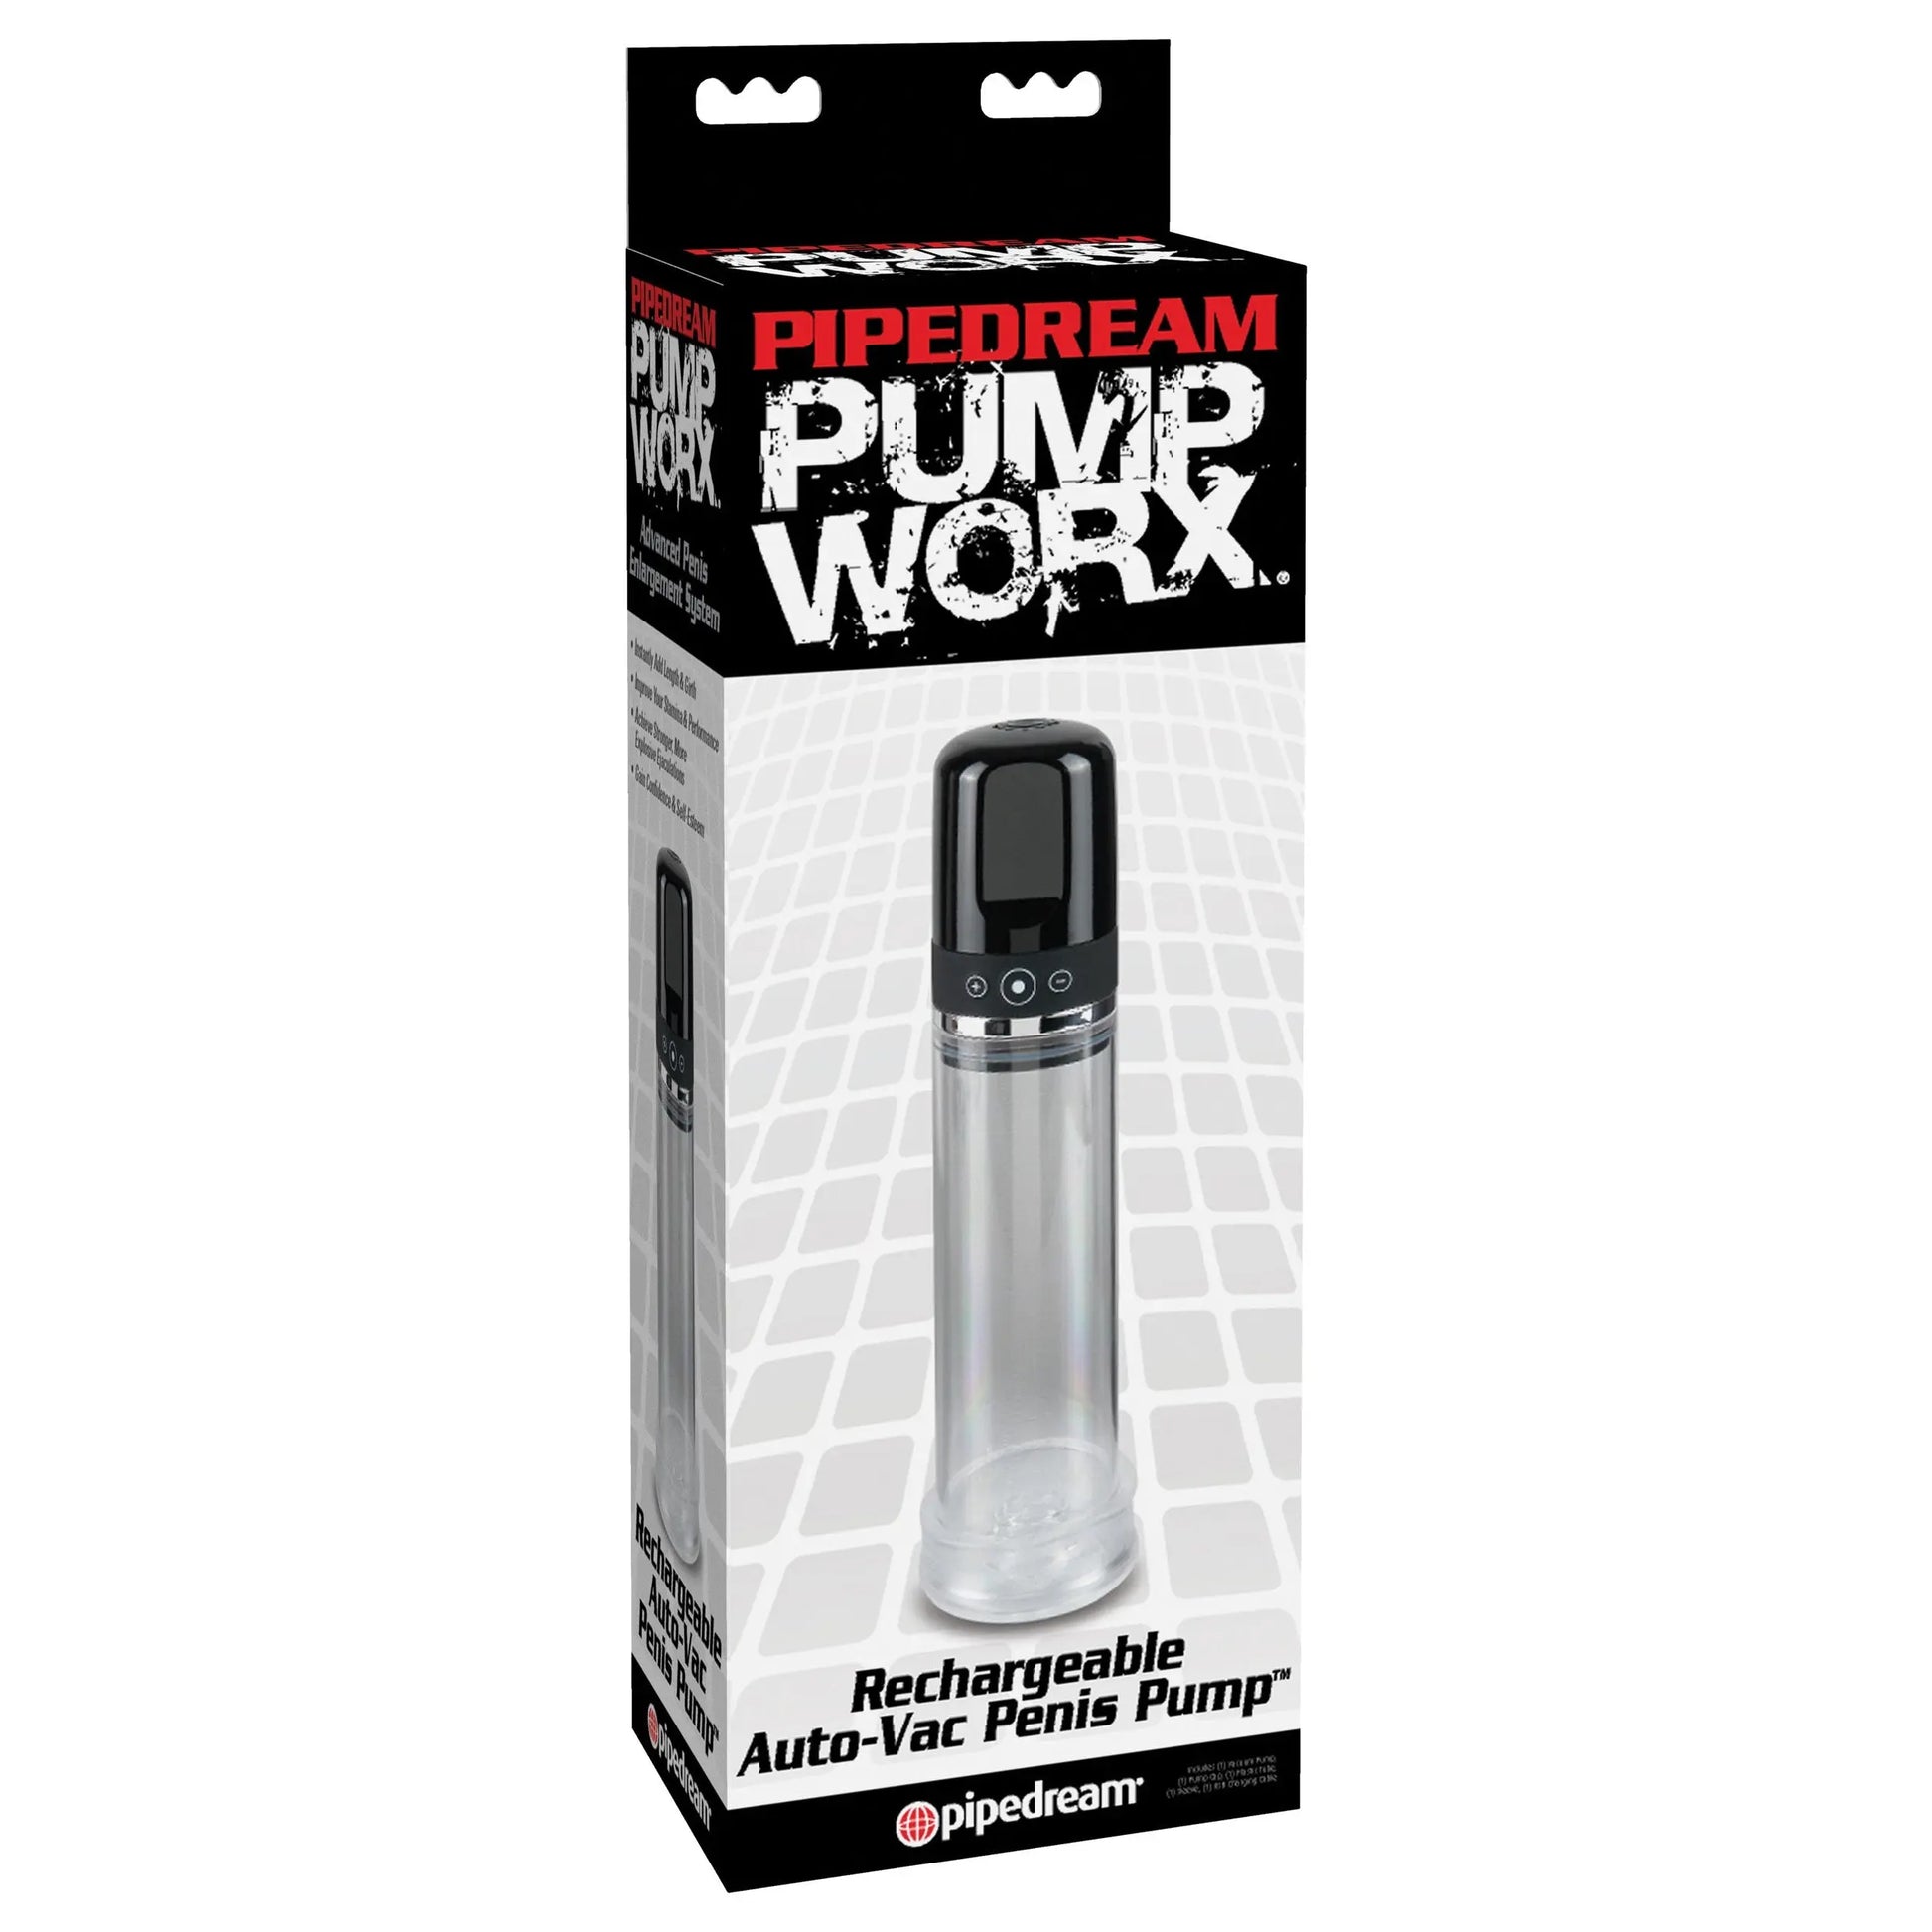 Pump Worx Rechargeable 3-Speed Auto-Vac Penis Pump